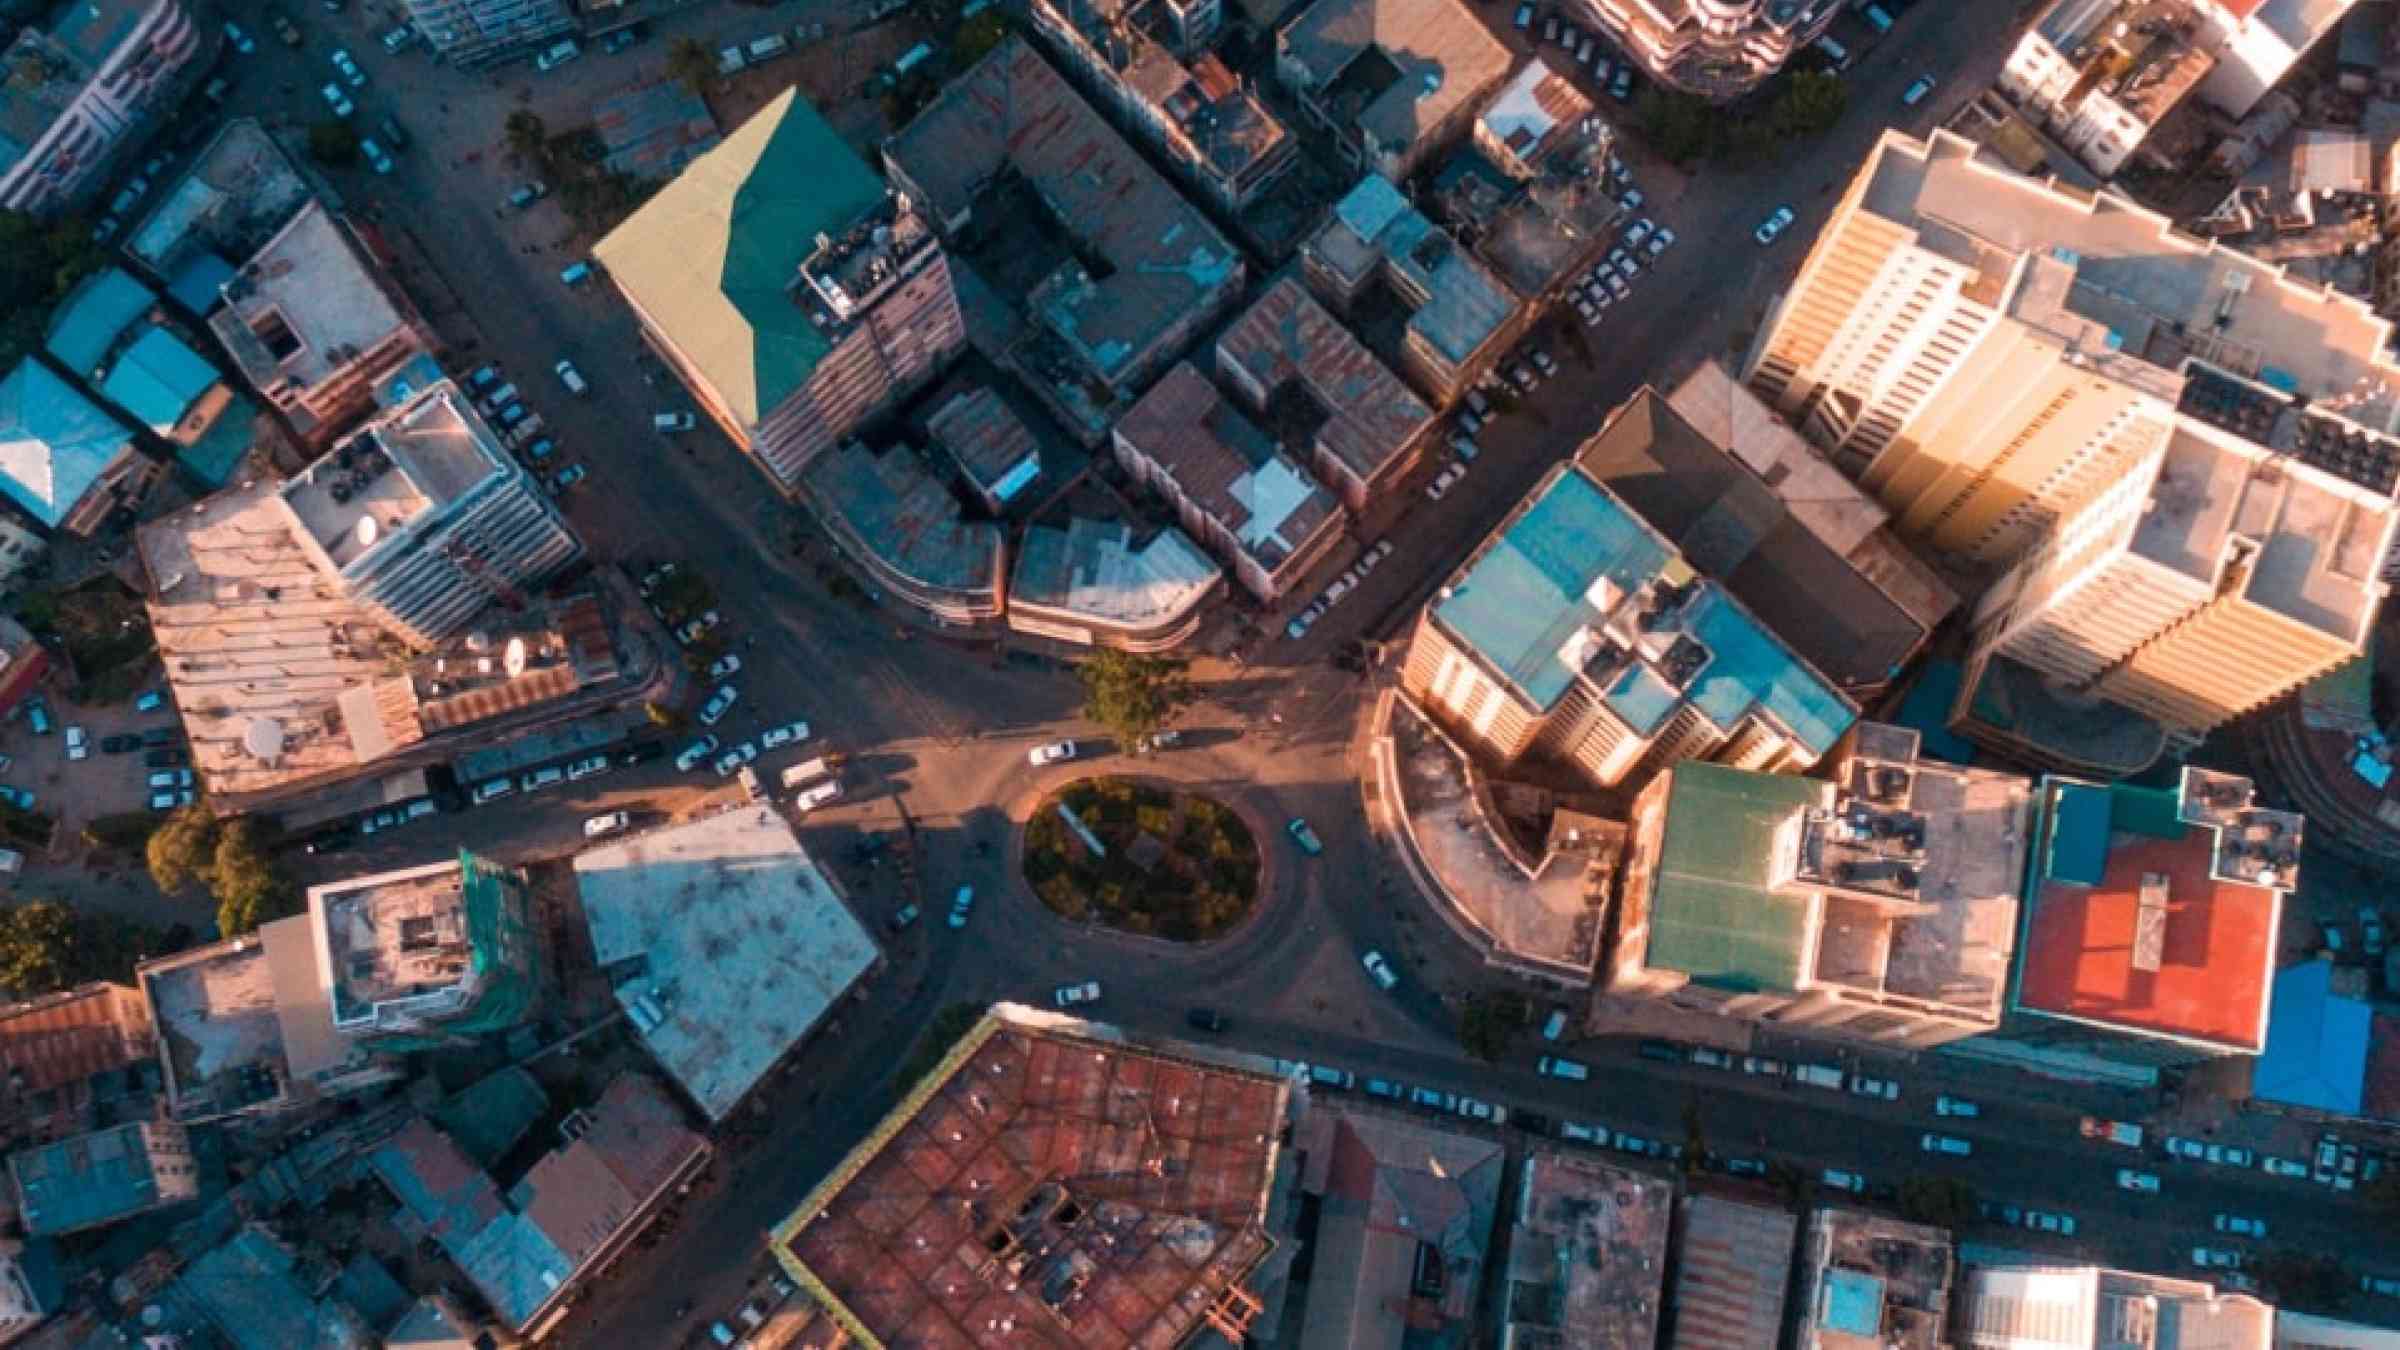 Aerial view of a neighborhood in the city of Dar es Salaam, Tanzania